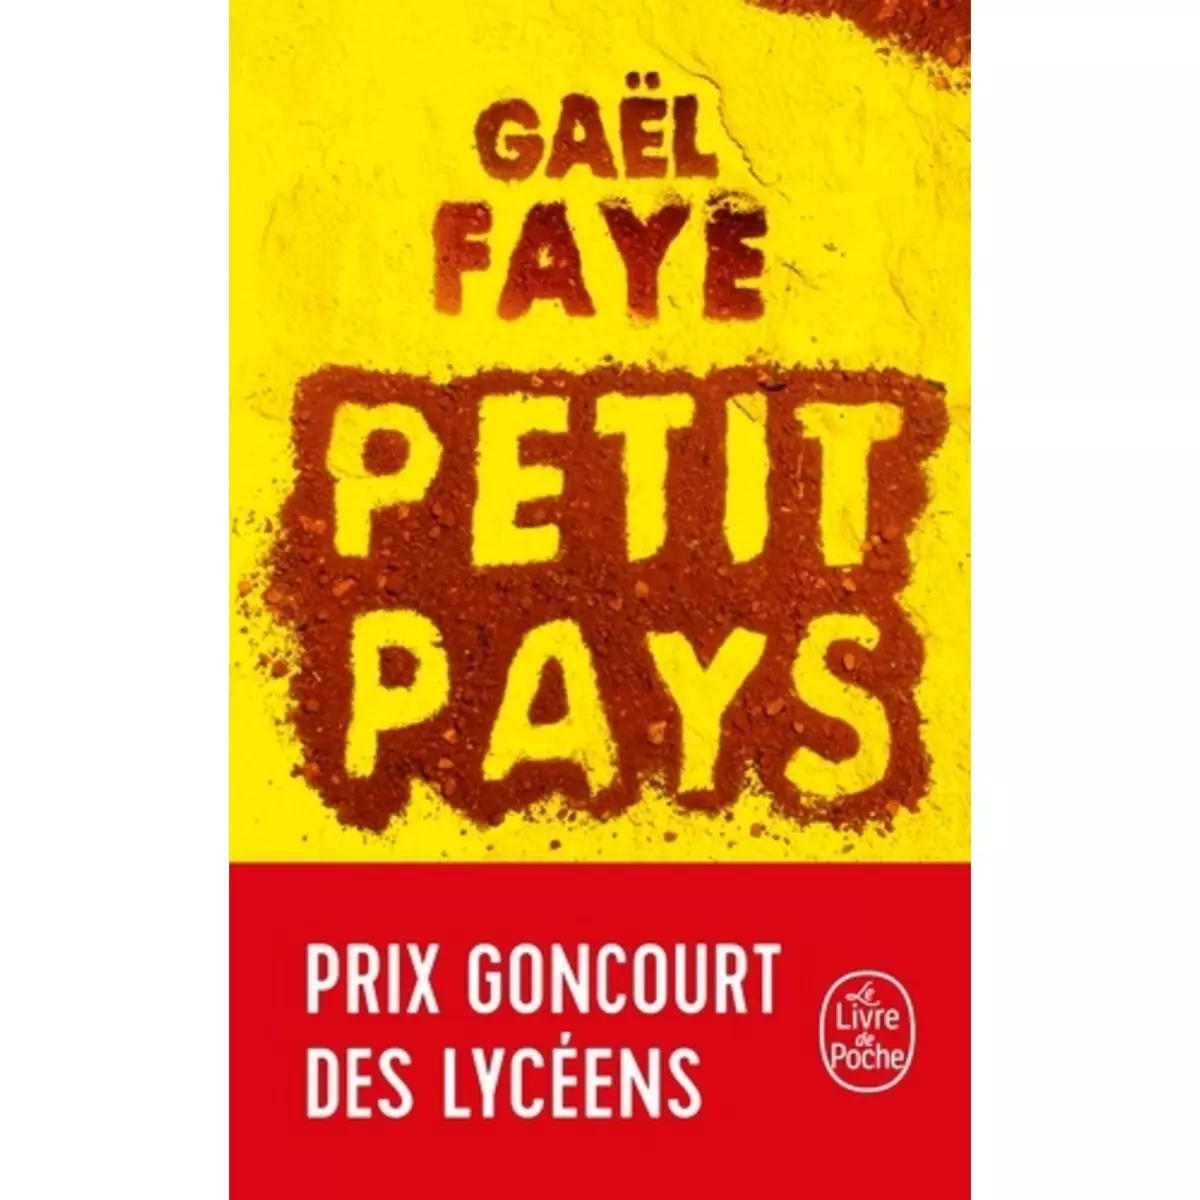  PETIT PAYS, Faye Gaël